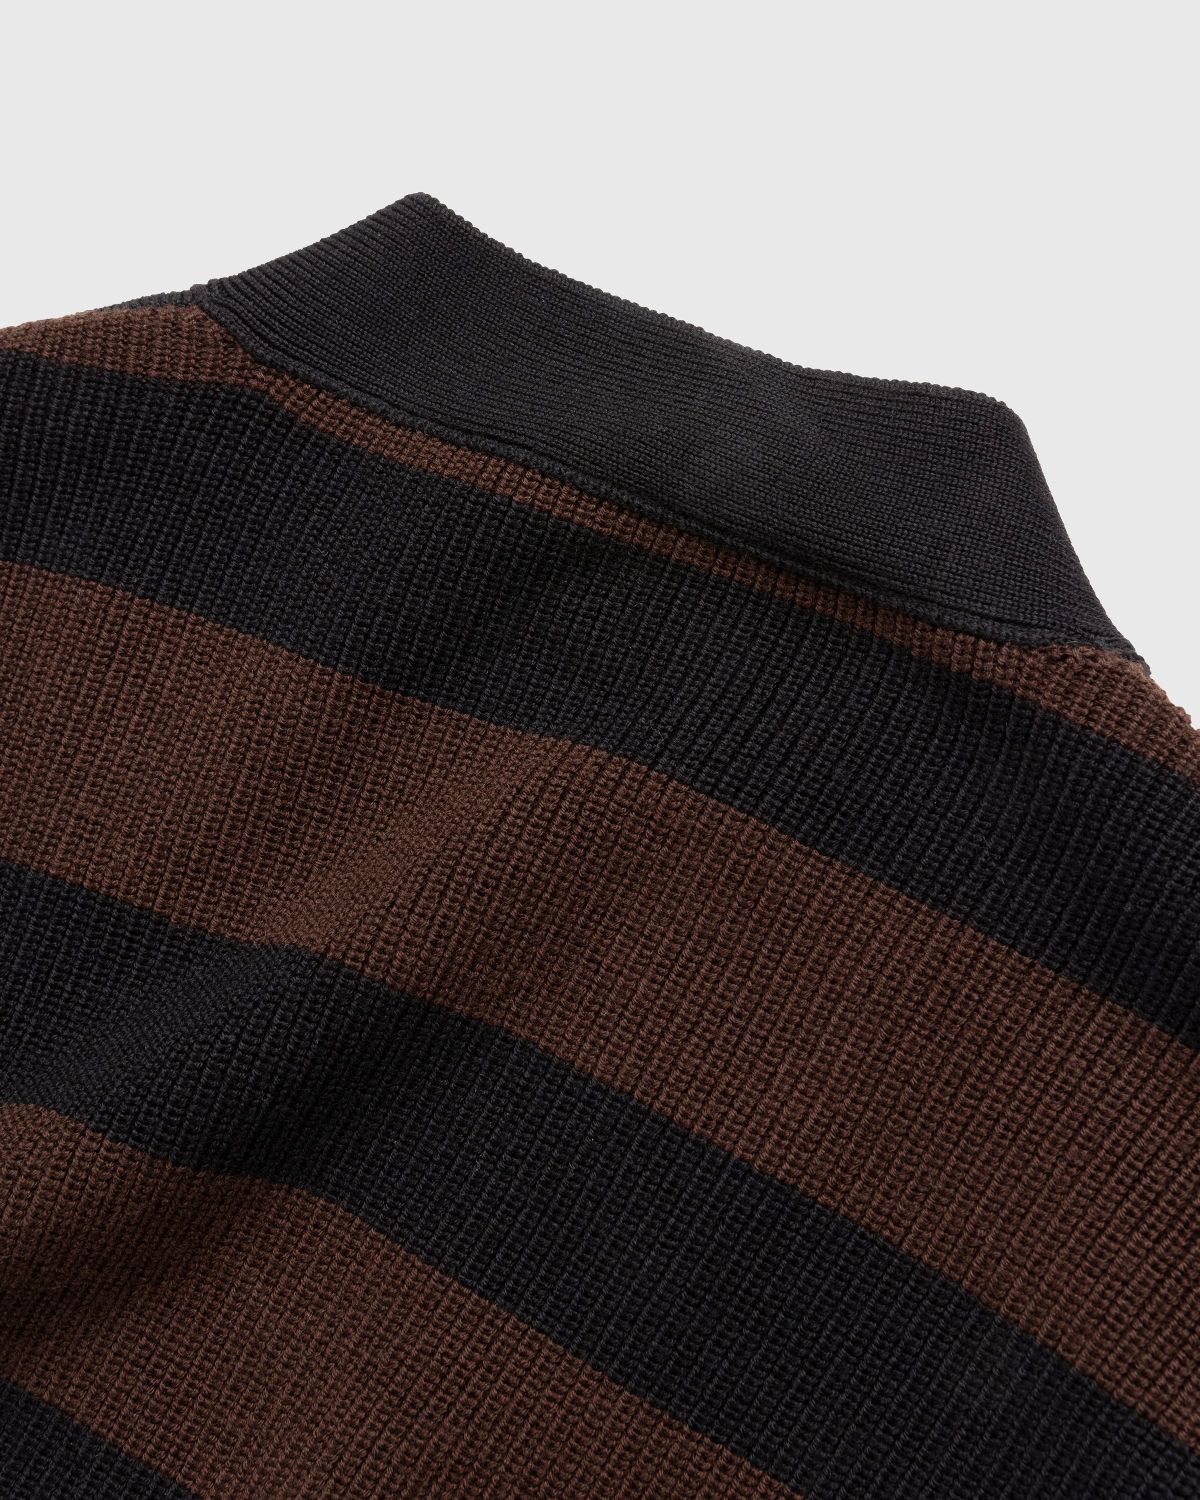 Kenzo – Striped Wool Cardigan Black - Knitwear - Black - Image 3